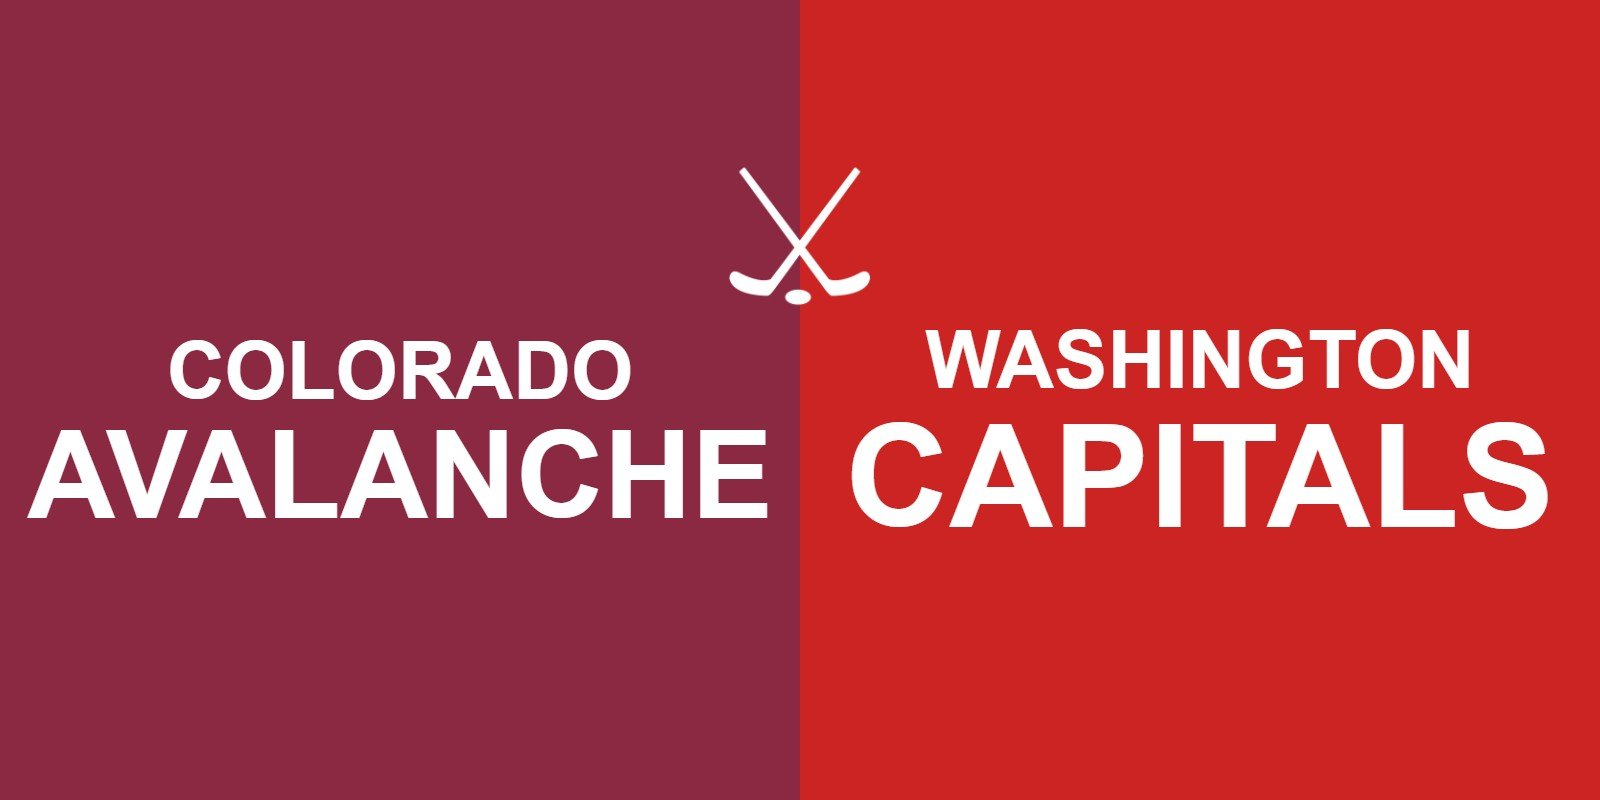 Avalanche vs Capitals